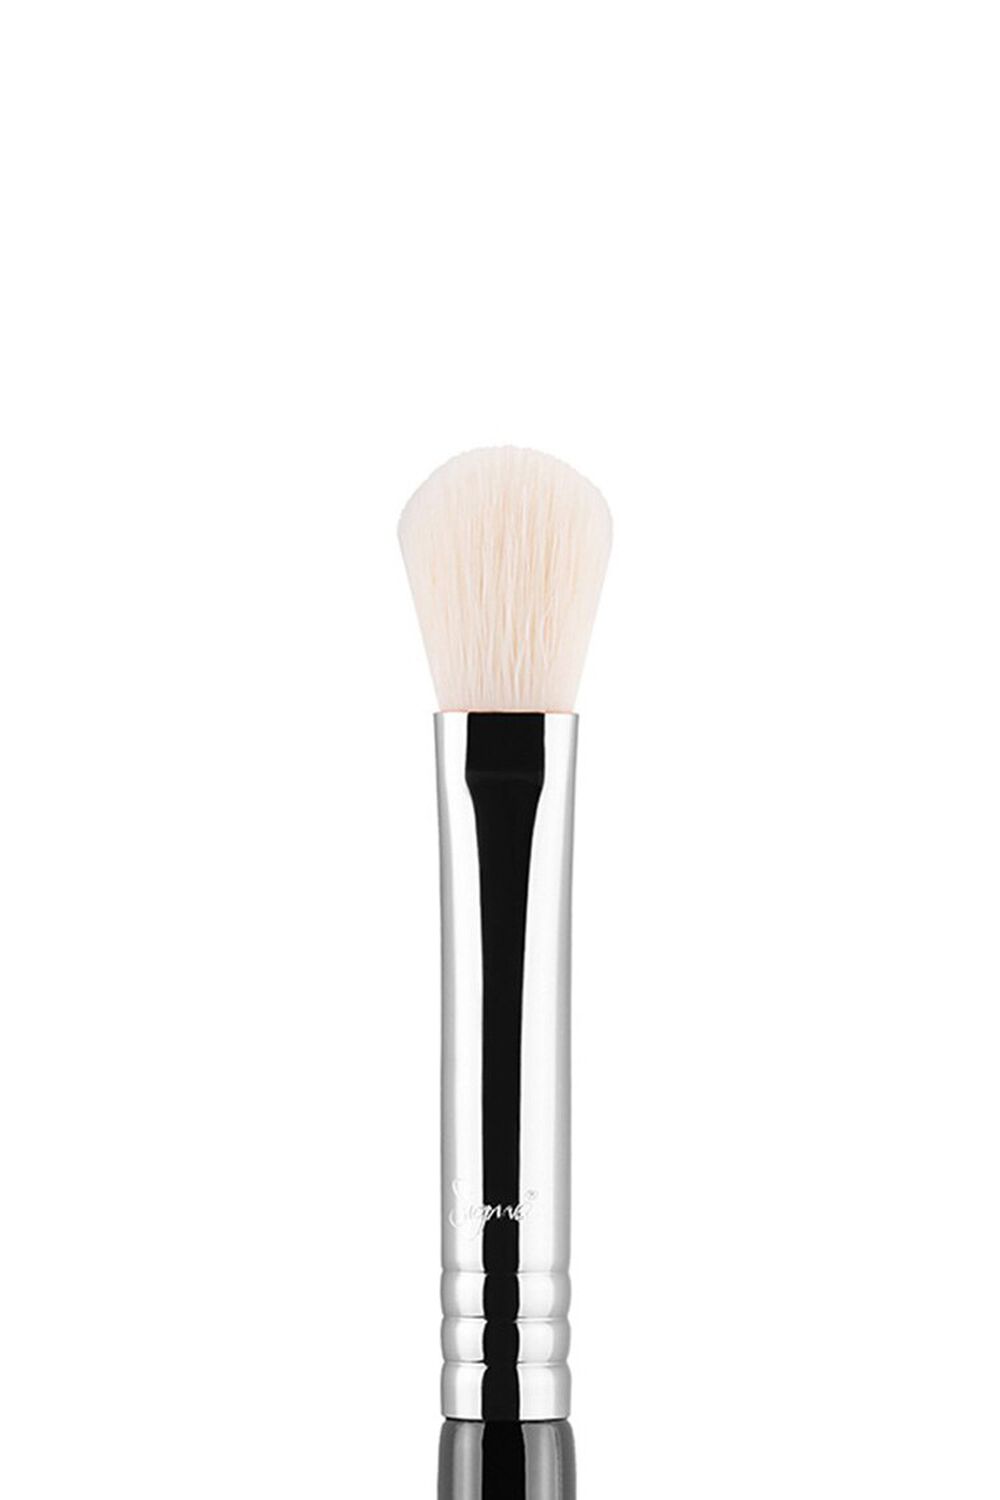 Sigma Beauty E25 – Blending Brush, image 2